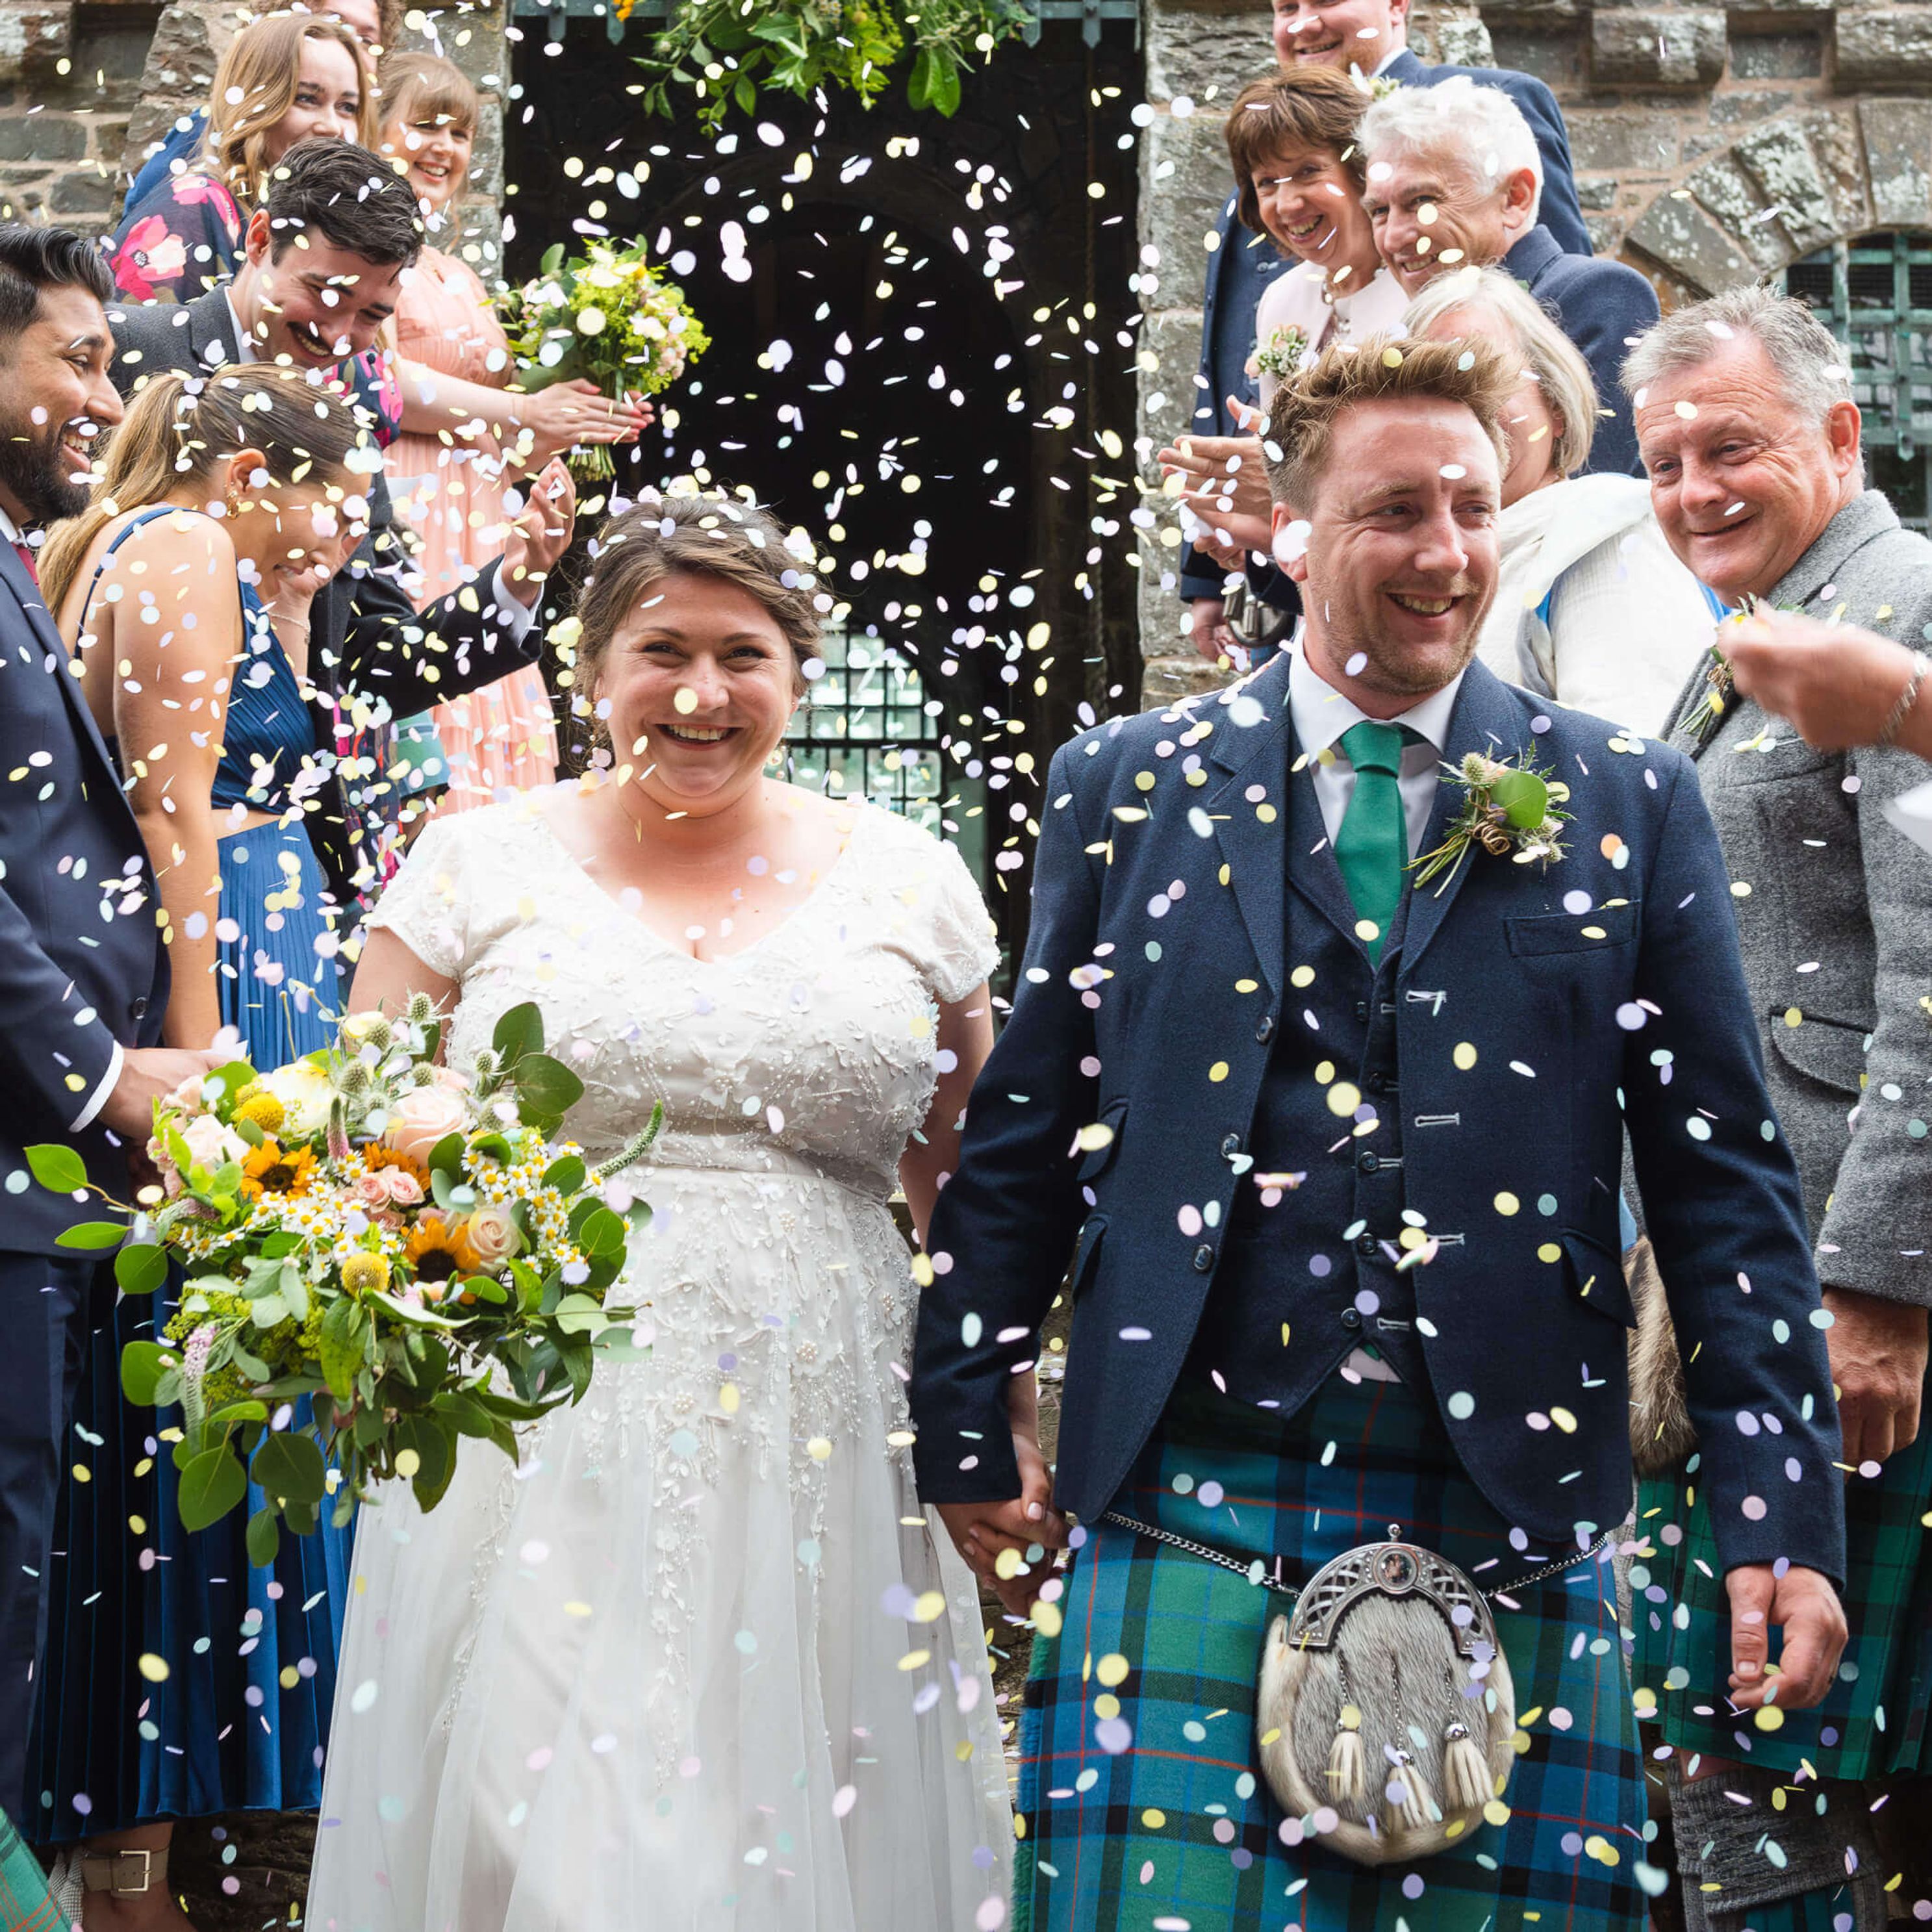 Kirkandrews wedding photographer blog in Dumfries and Galloway. Kirkcudbrightshire.